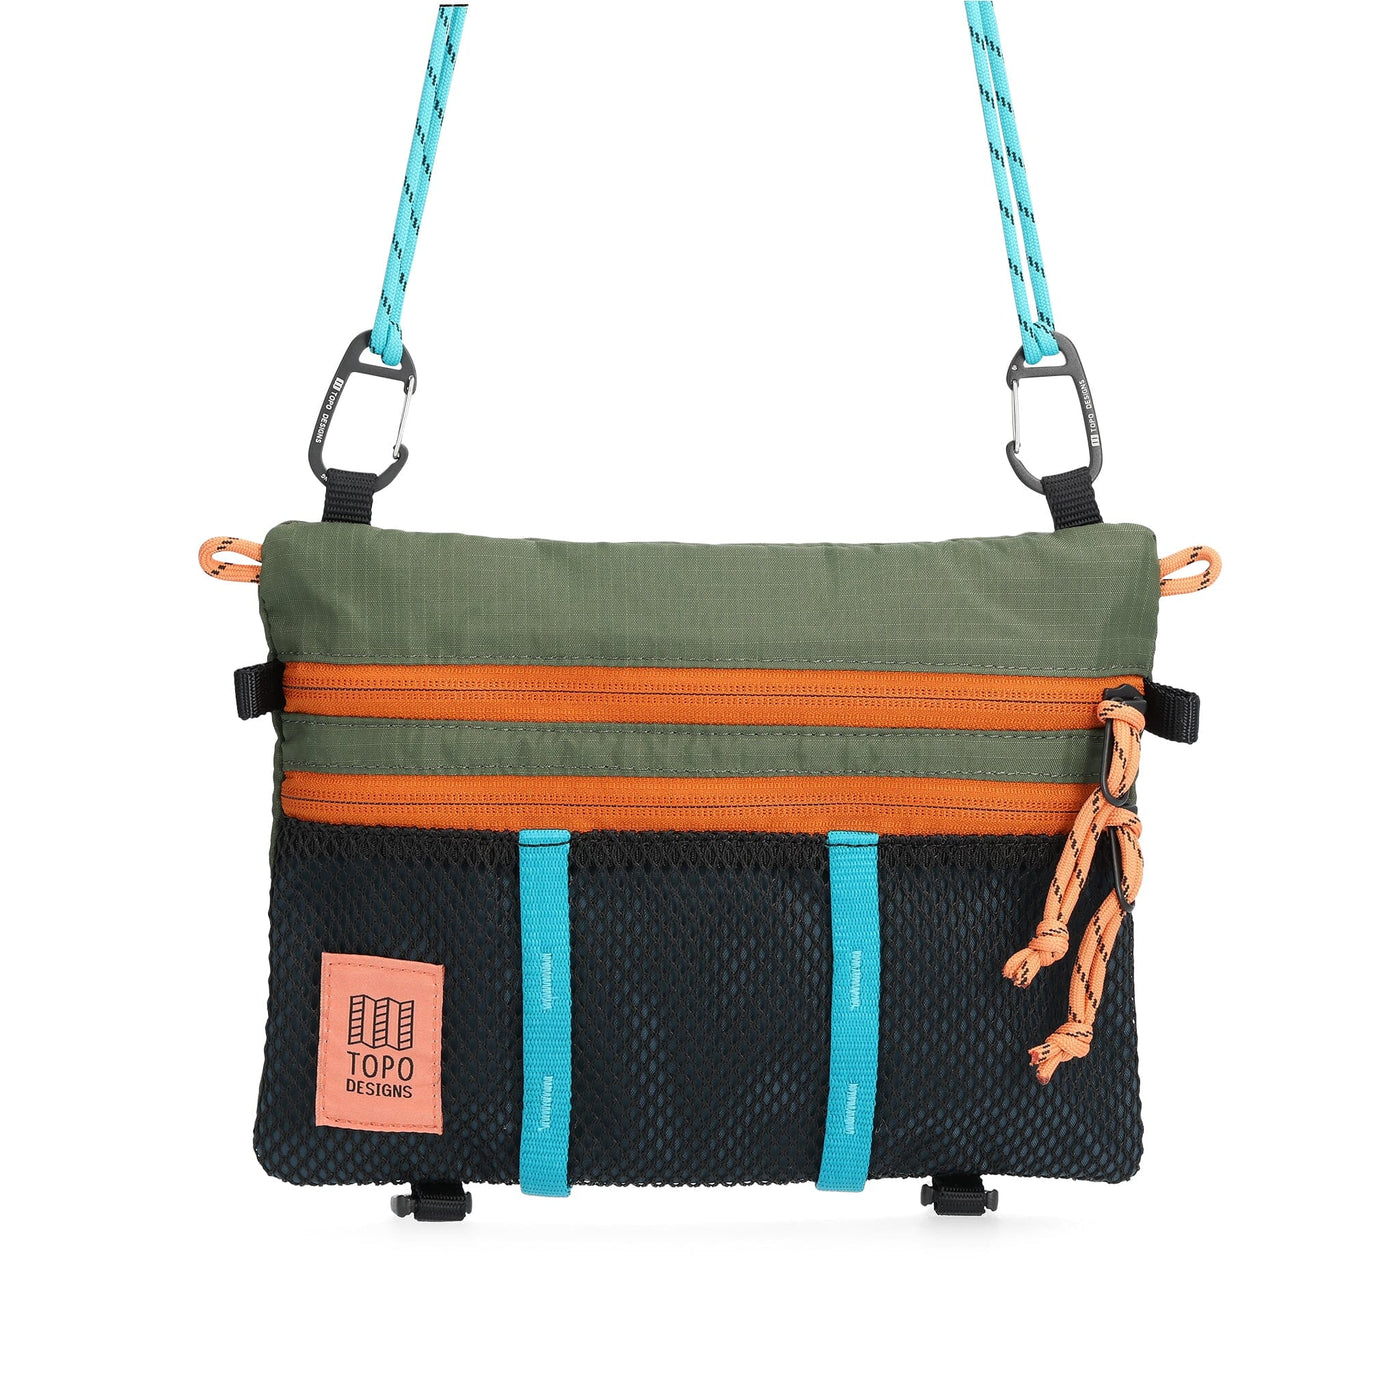 topo designs mountain accessory shoulder bag olive pond blue front